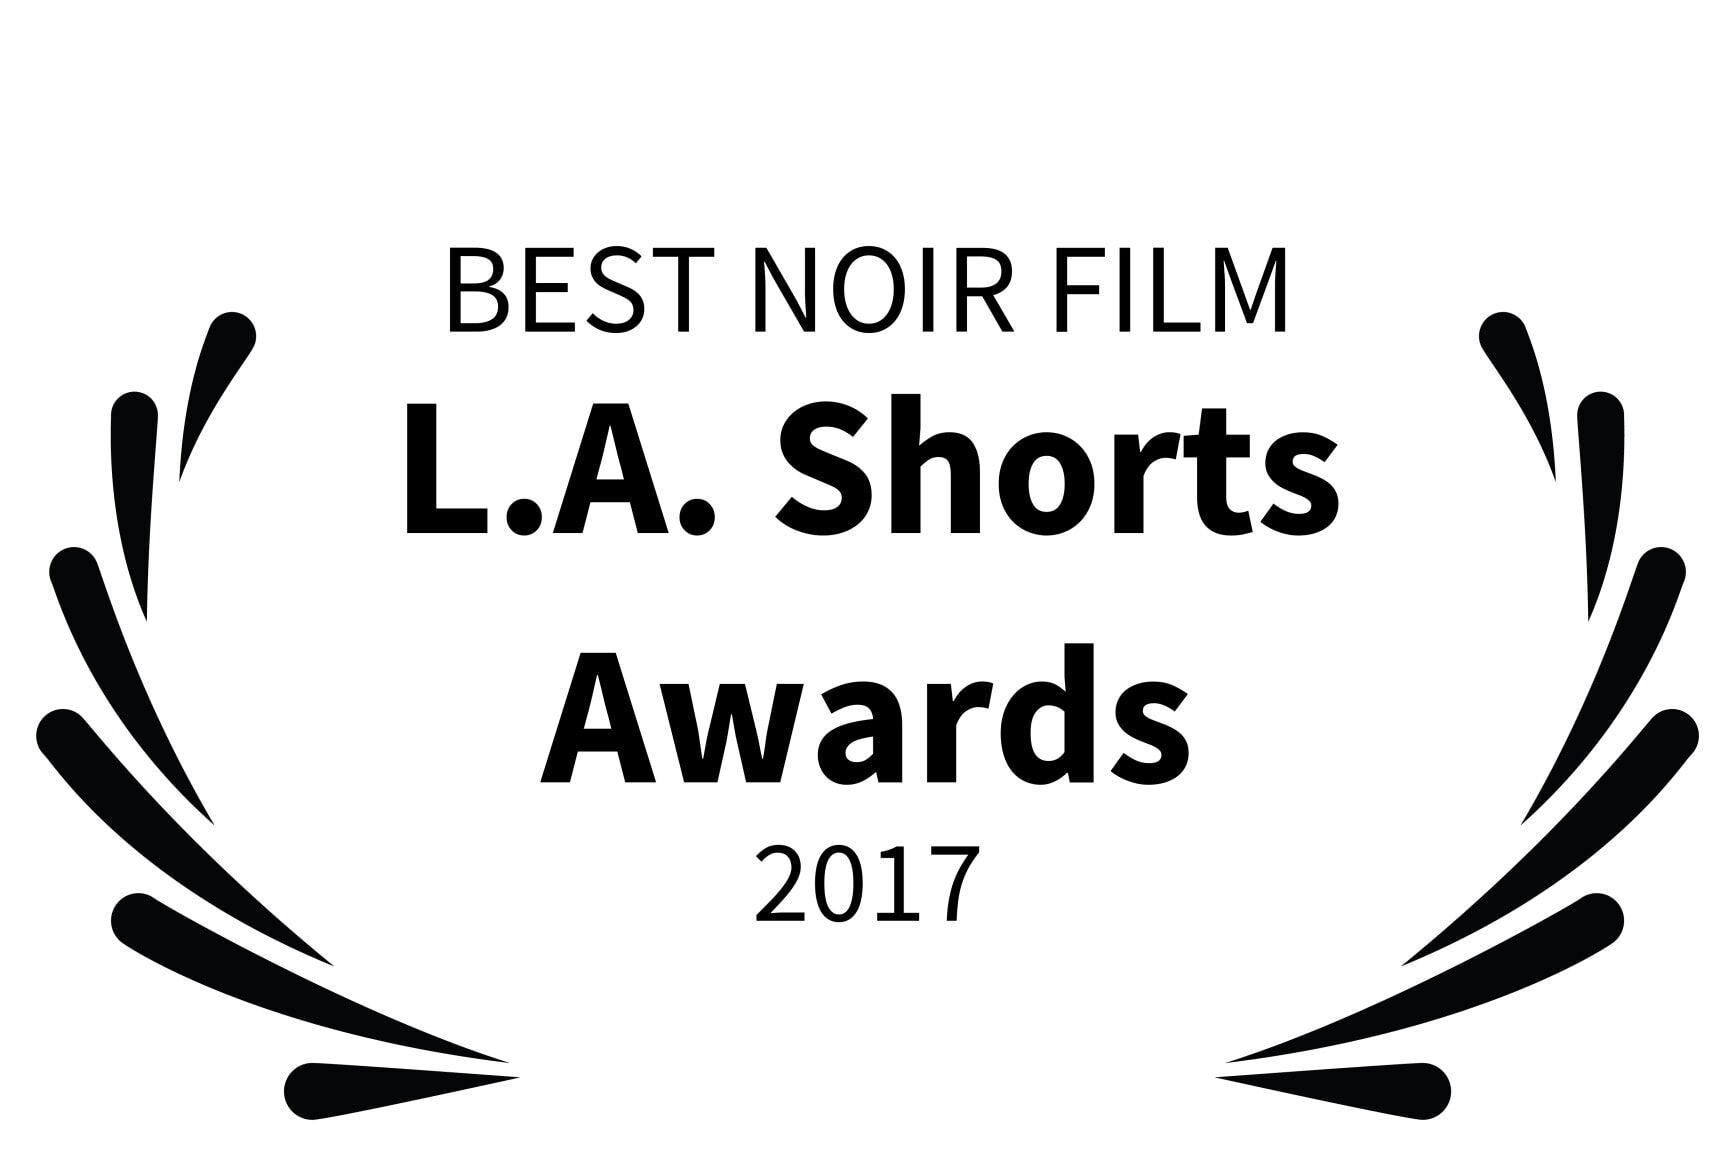 BEST NOIR FILM - L.A. Shorts Awards - 2017